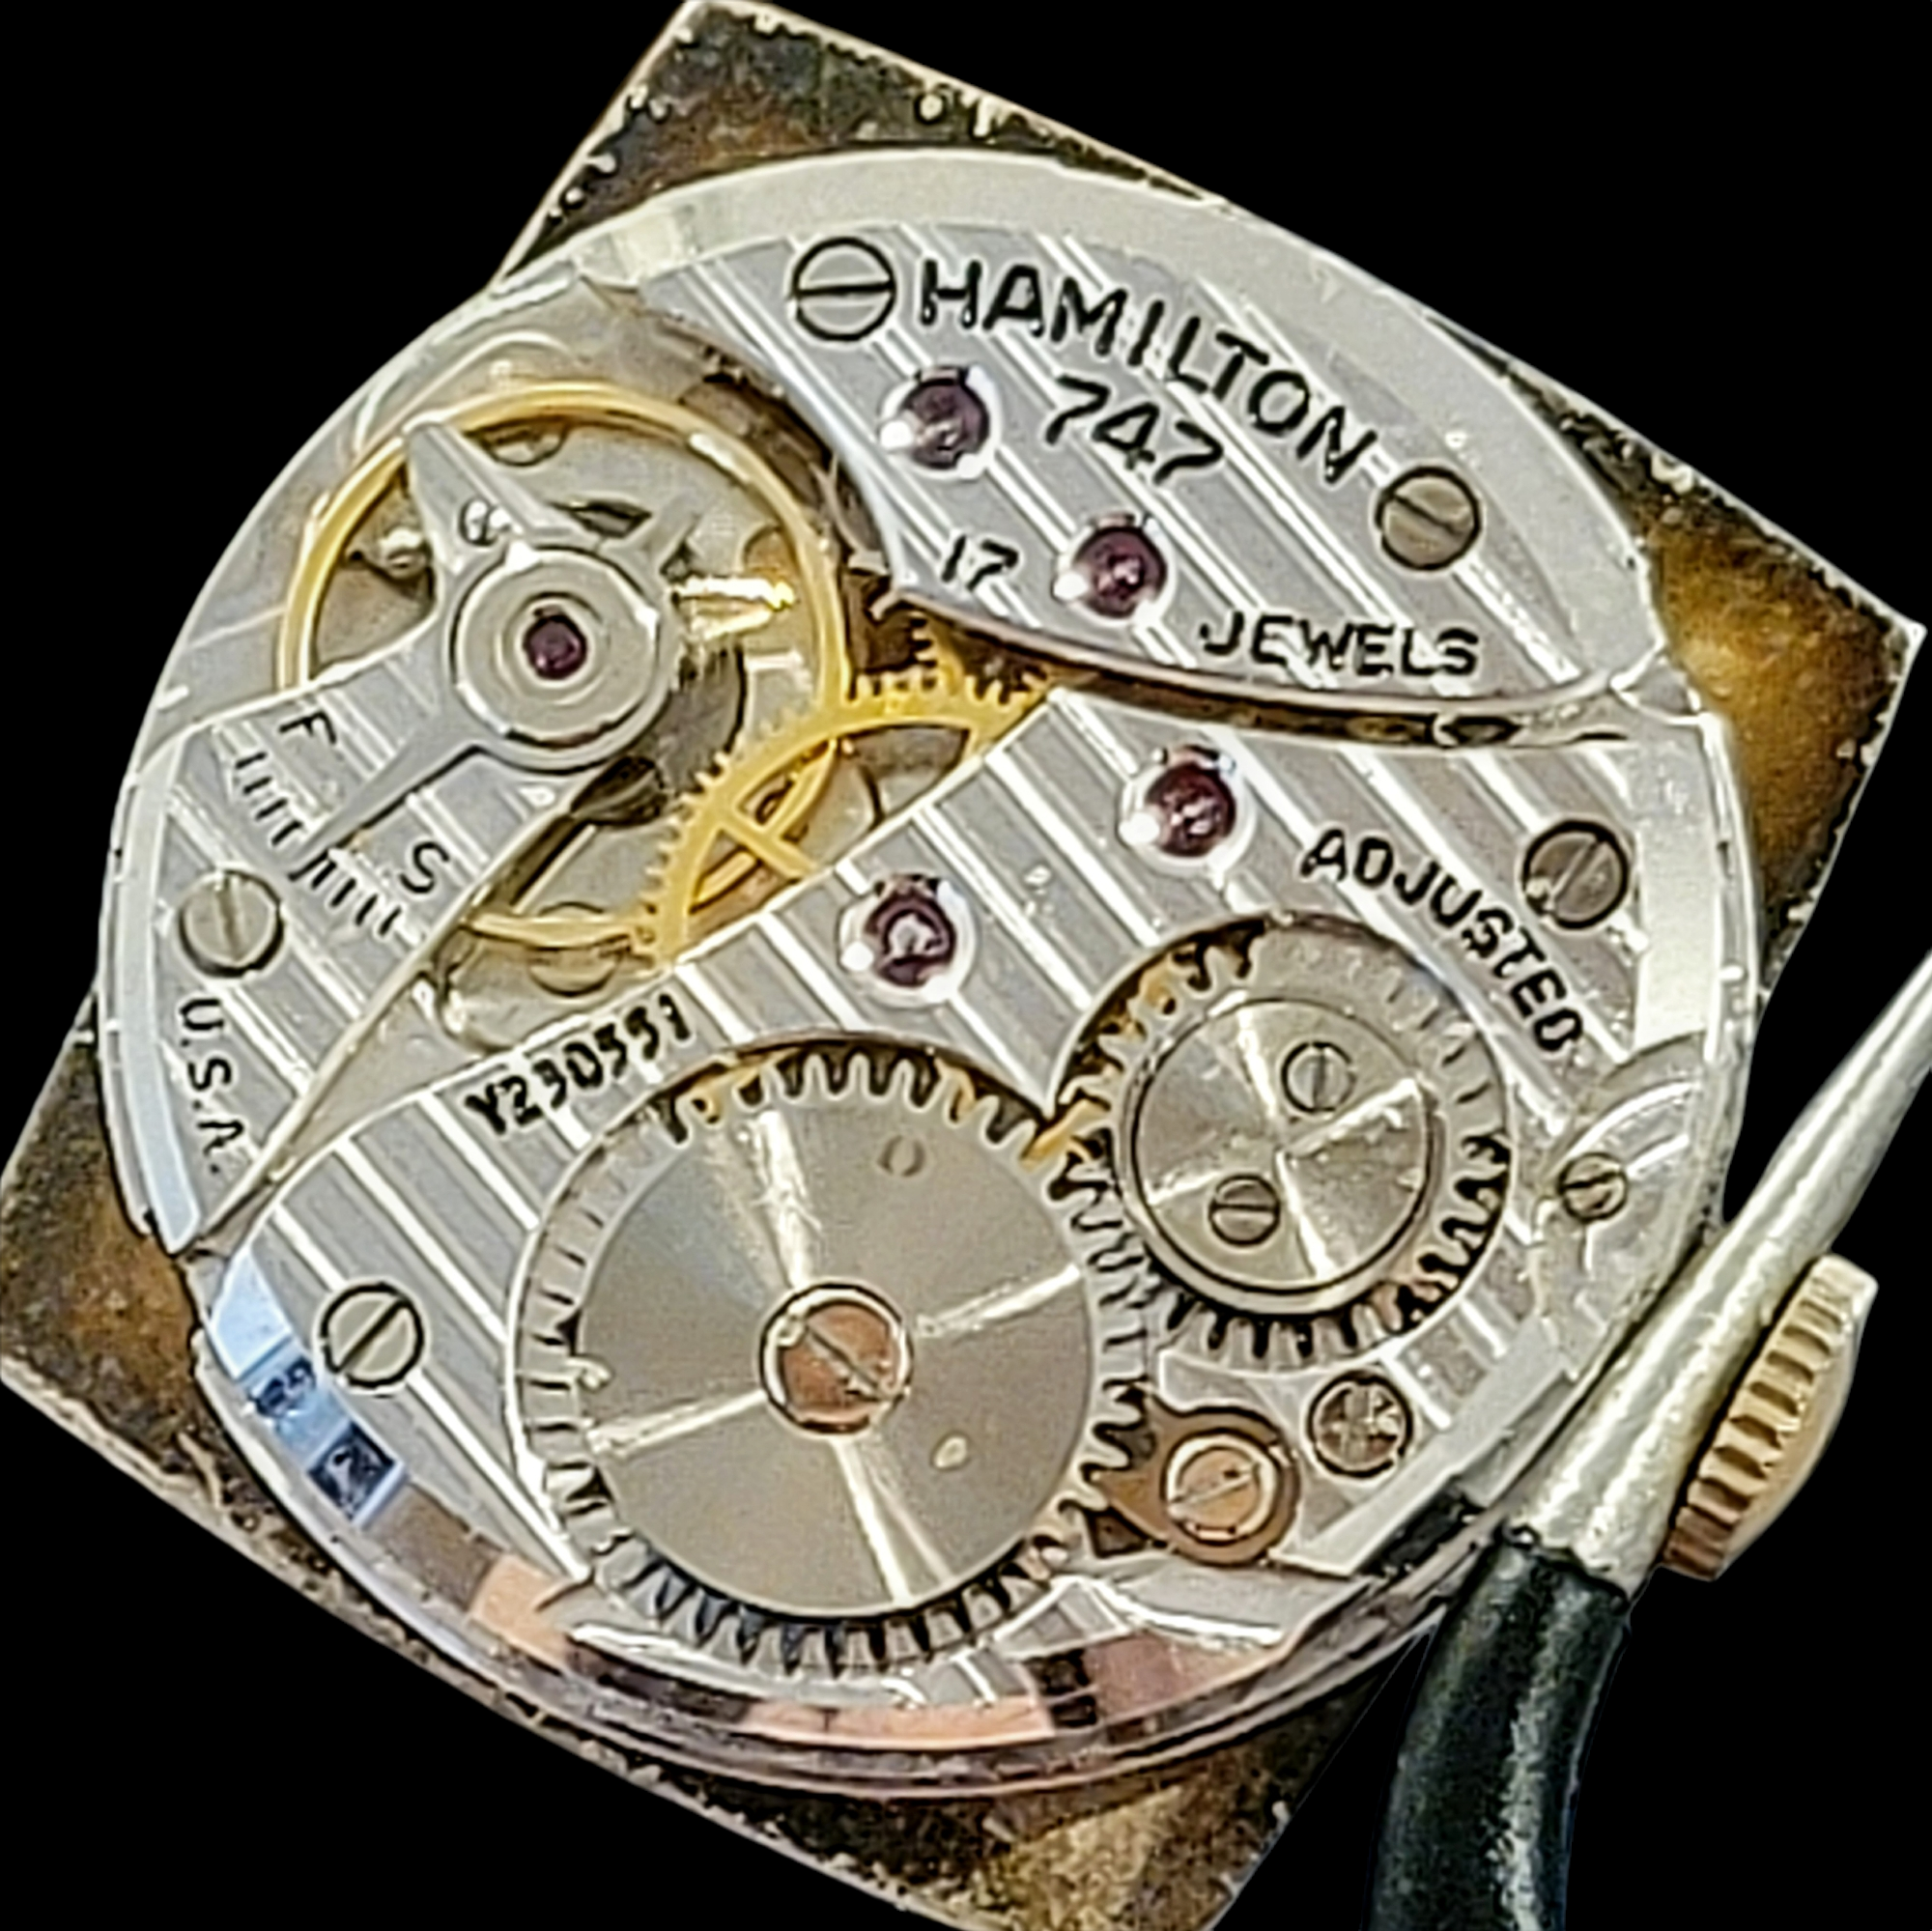 HAMILTON 1950 Dunham Watch 17 Jewels Grade 747 U.S.A. Made